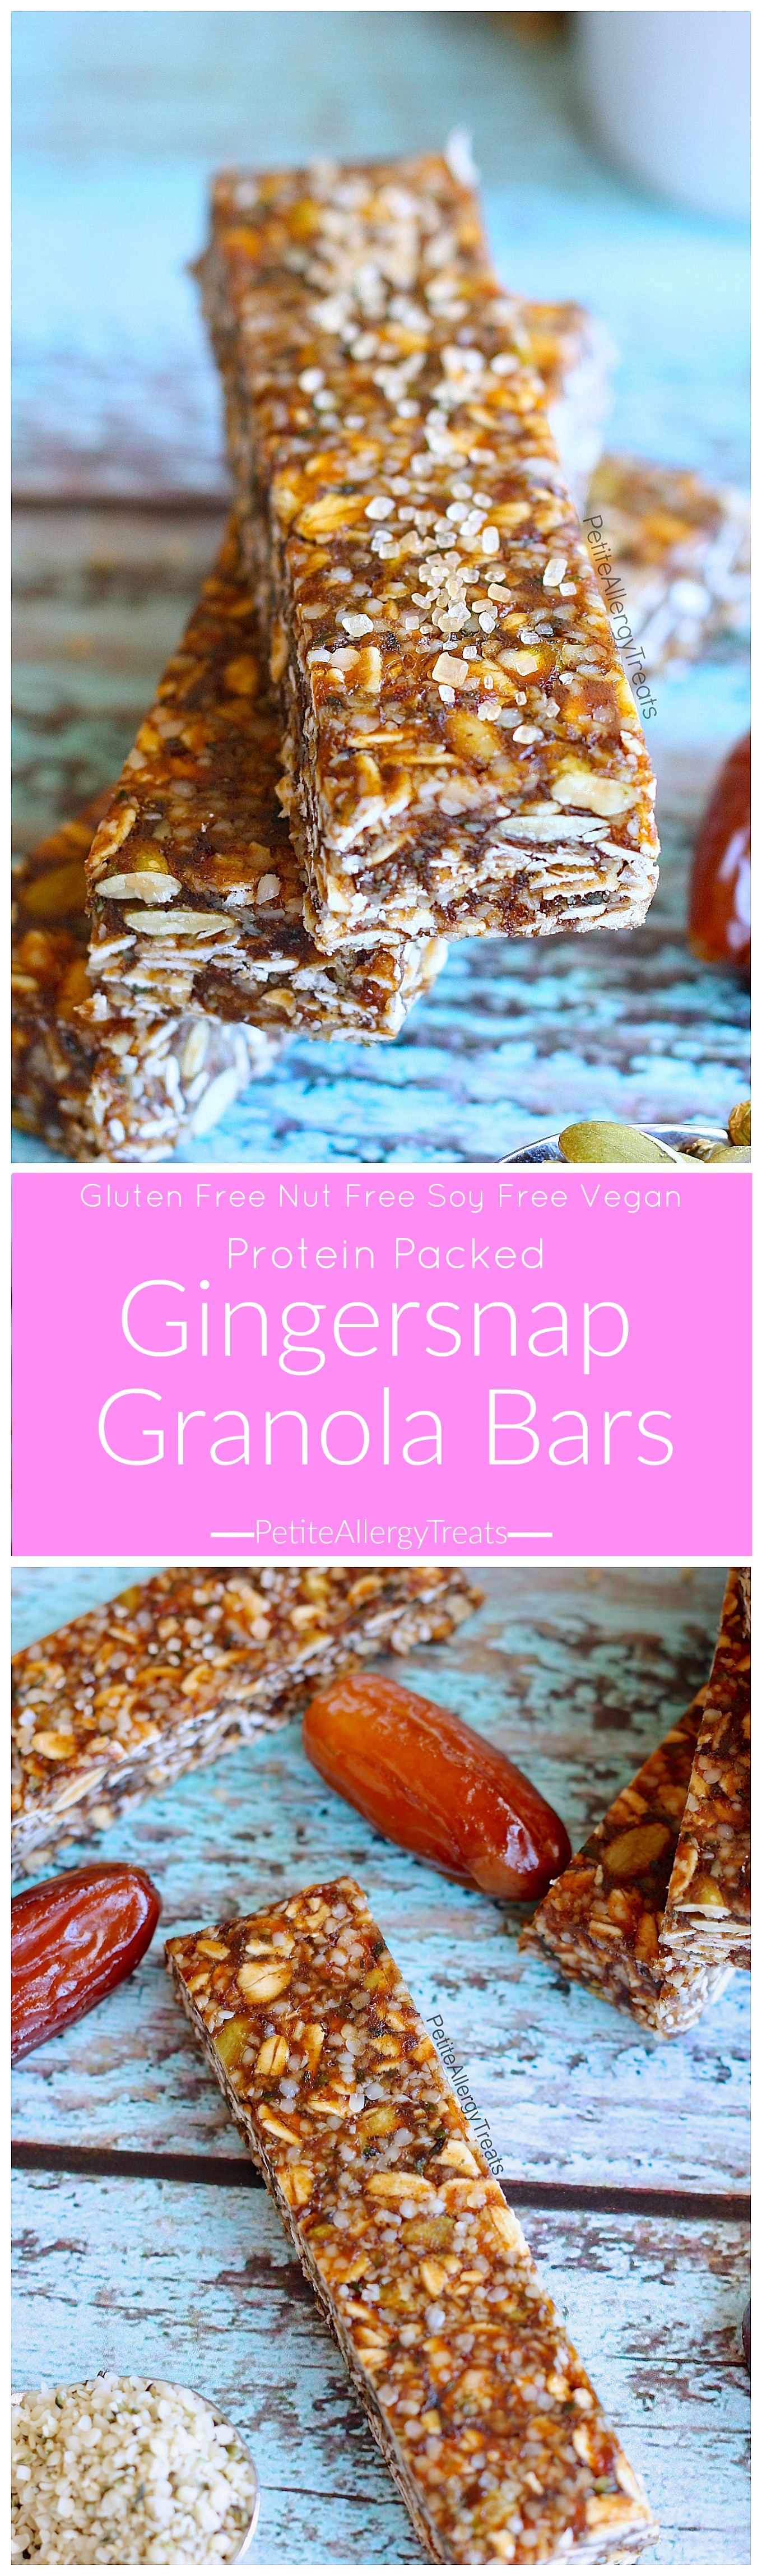 Protein Gingersnap Granola Bars Recipe (nut free Vegan)- Healthier gluten free protein packed gingersnap granola bars. Food Allergy Friendly.